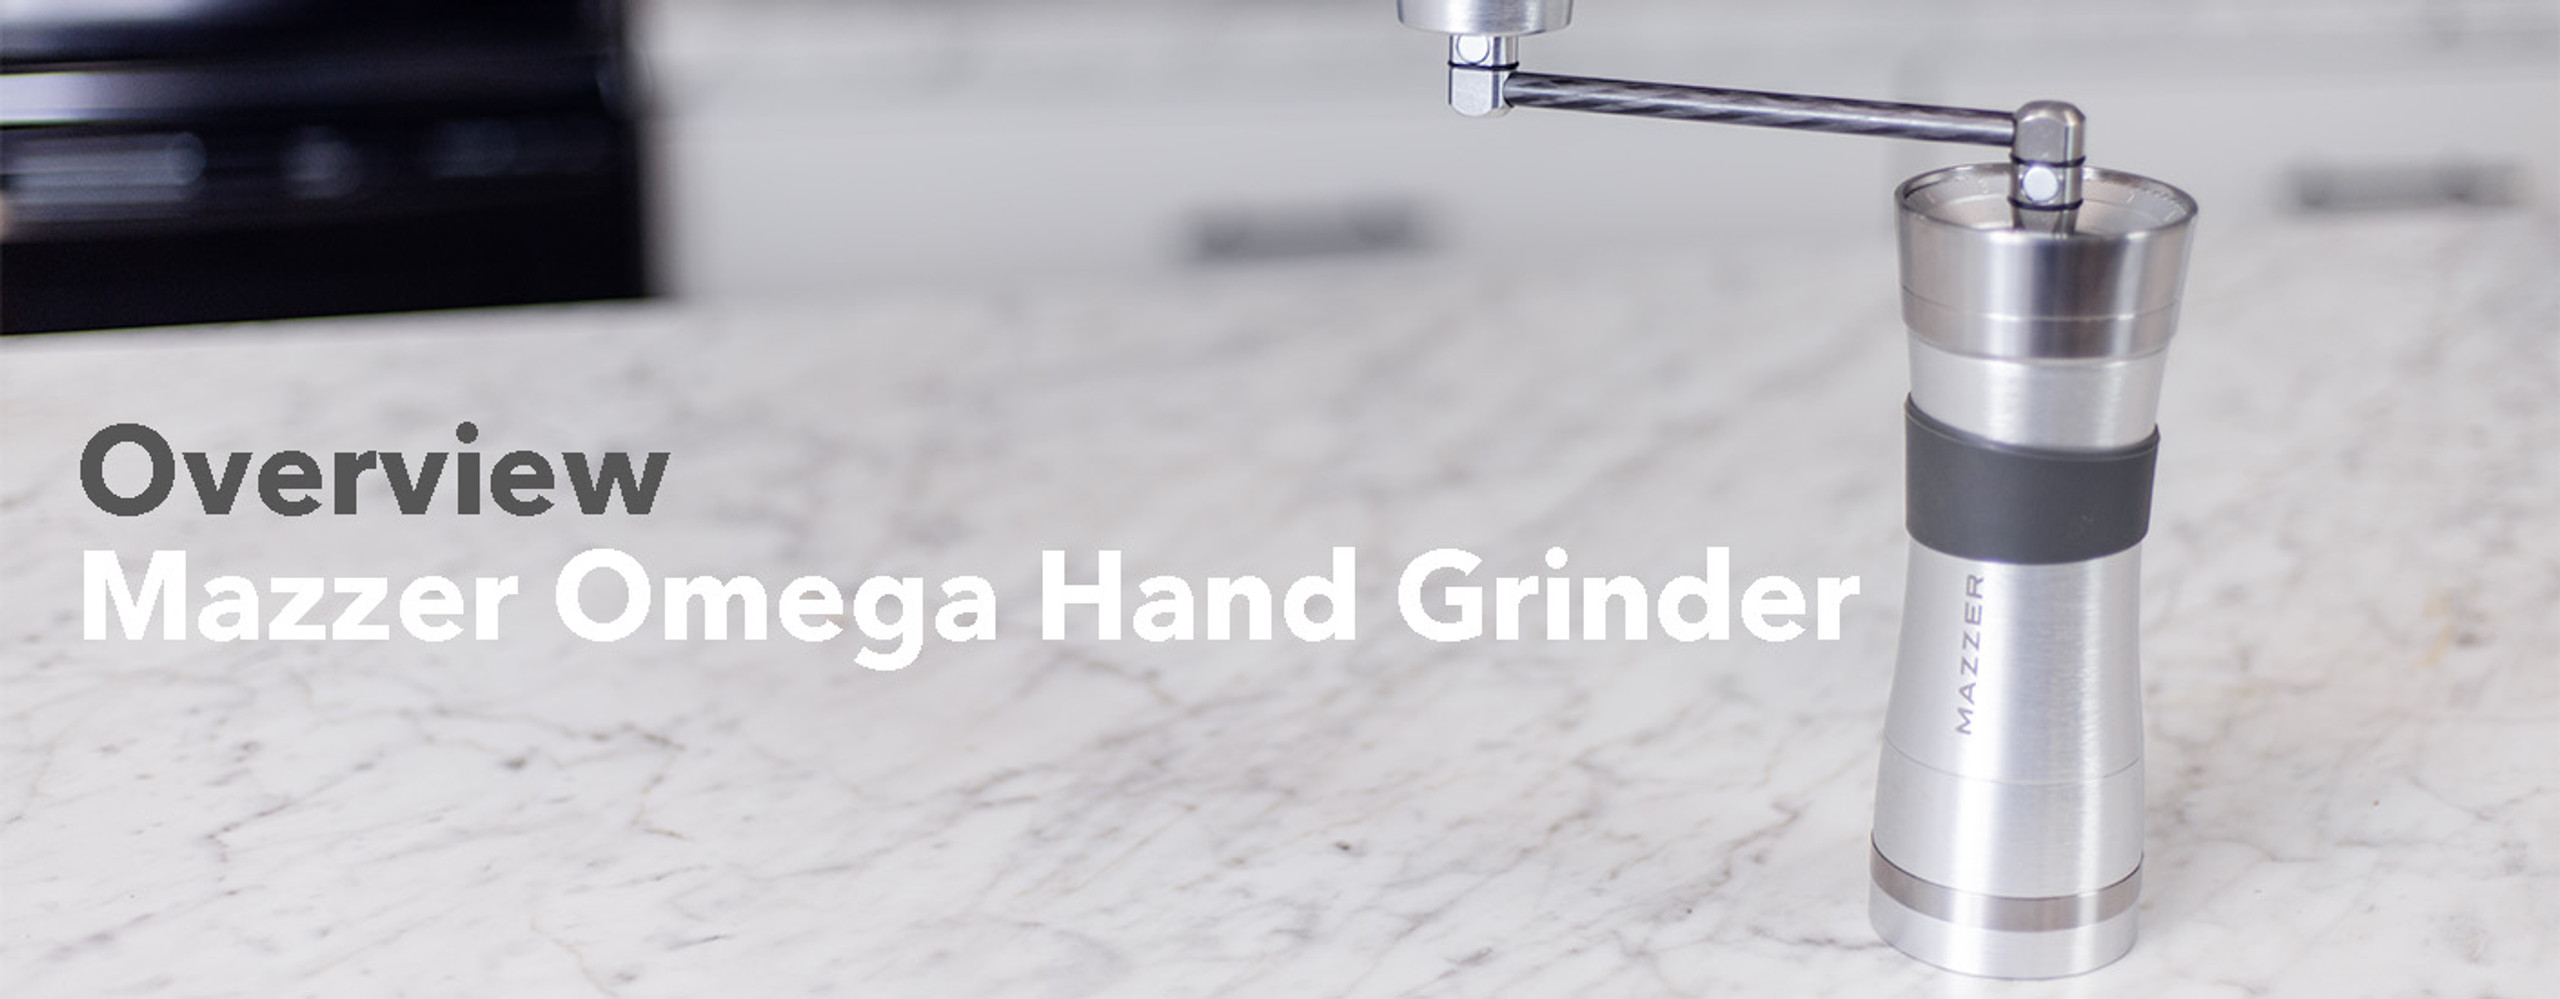 Mazzer Omega Hand Grinder Overview